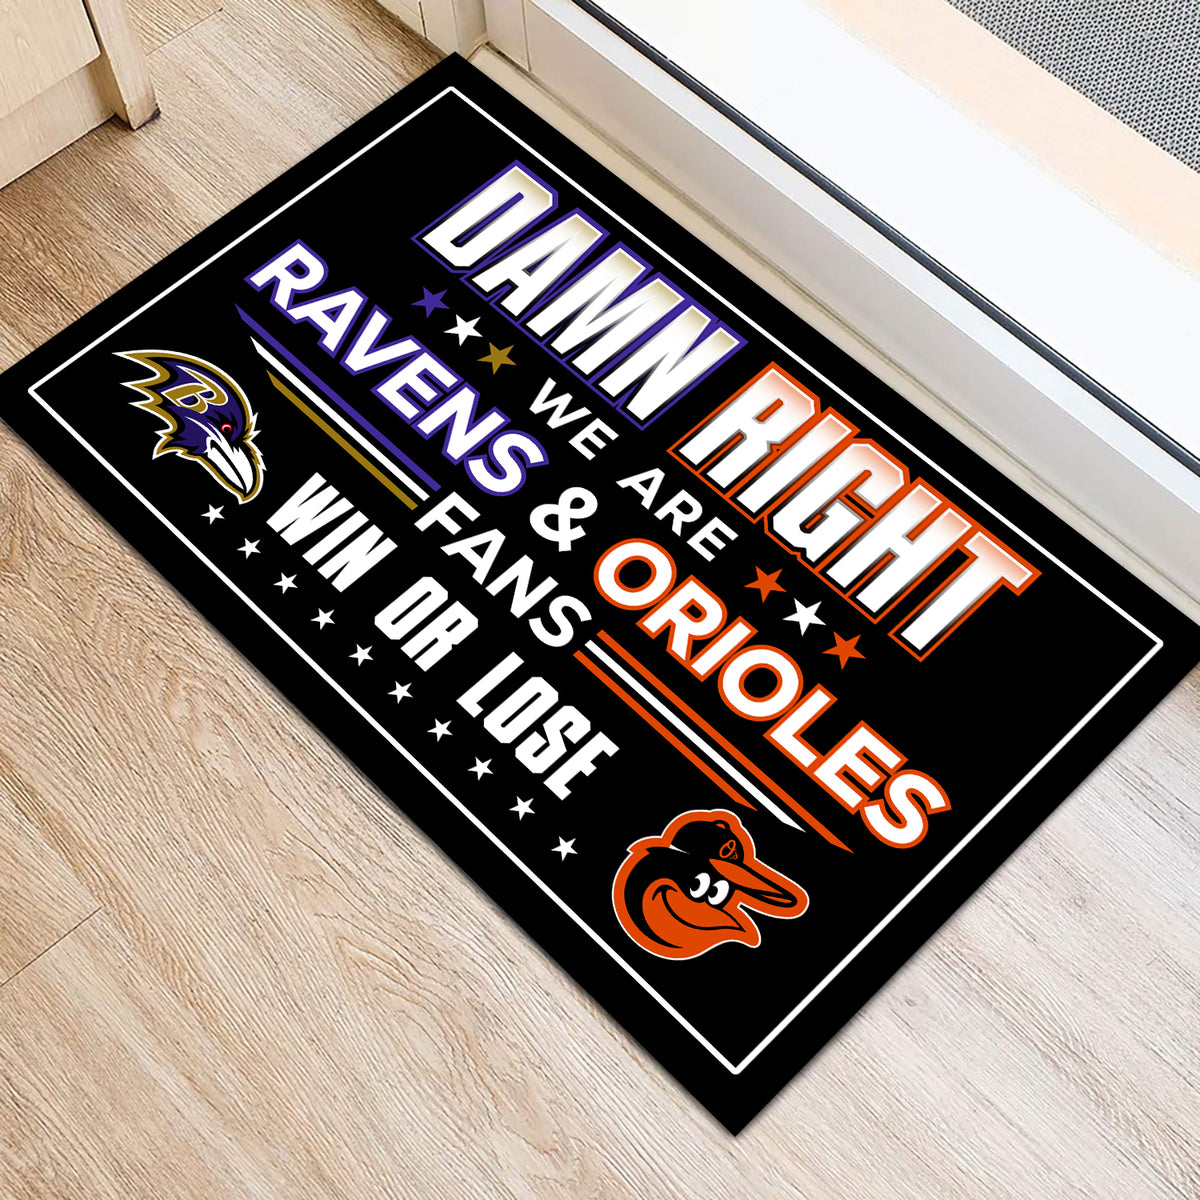 We are Baltimore RV&ORO Fans - Anti Slip Indoor Doormat